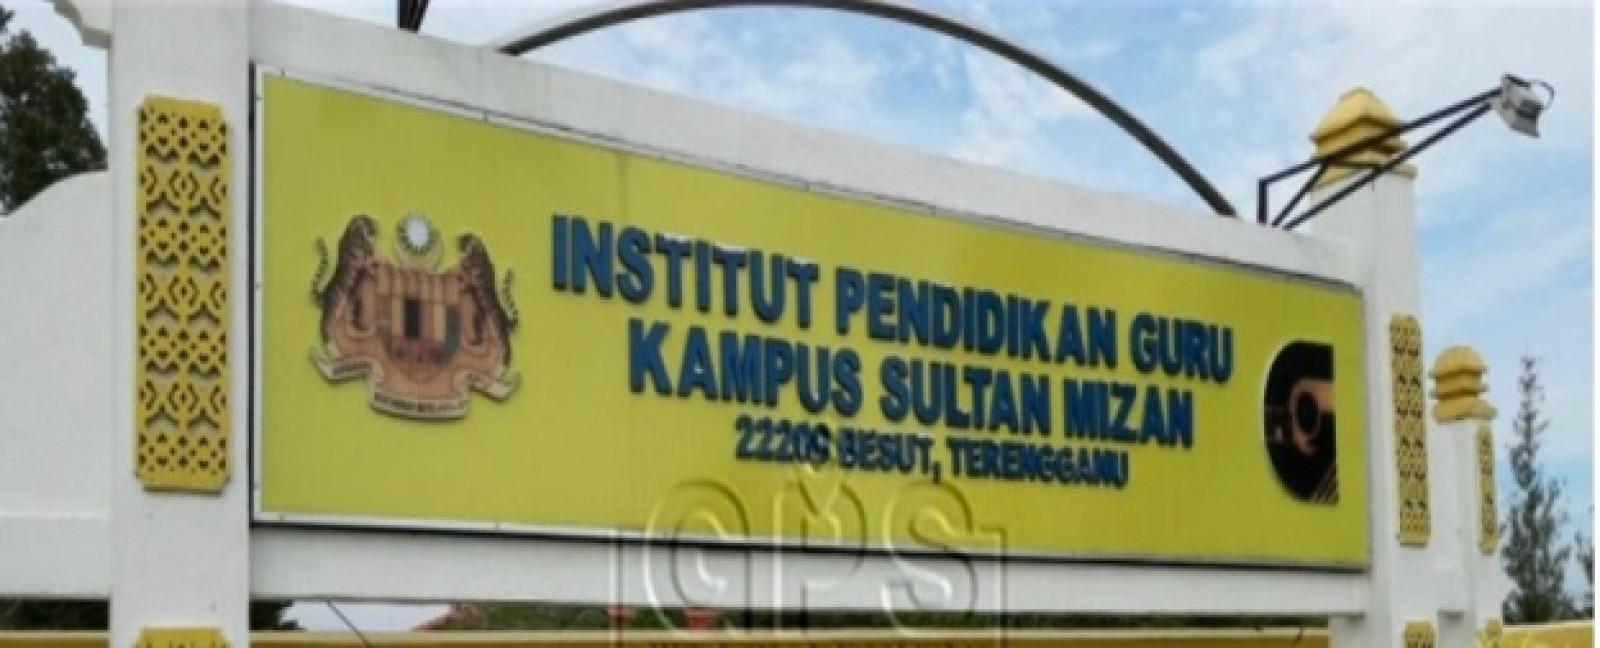 Institut Pendidikan Guru Kampus Sultan Mizan Mycompass